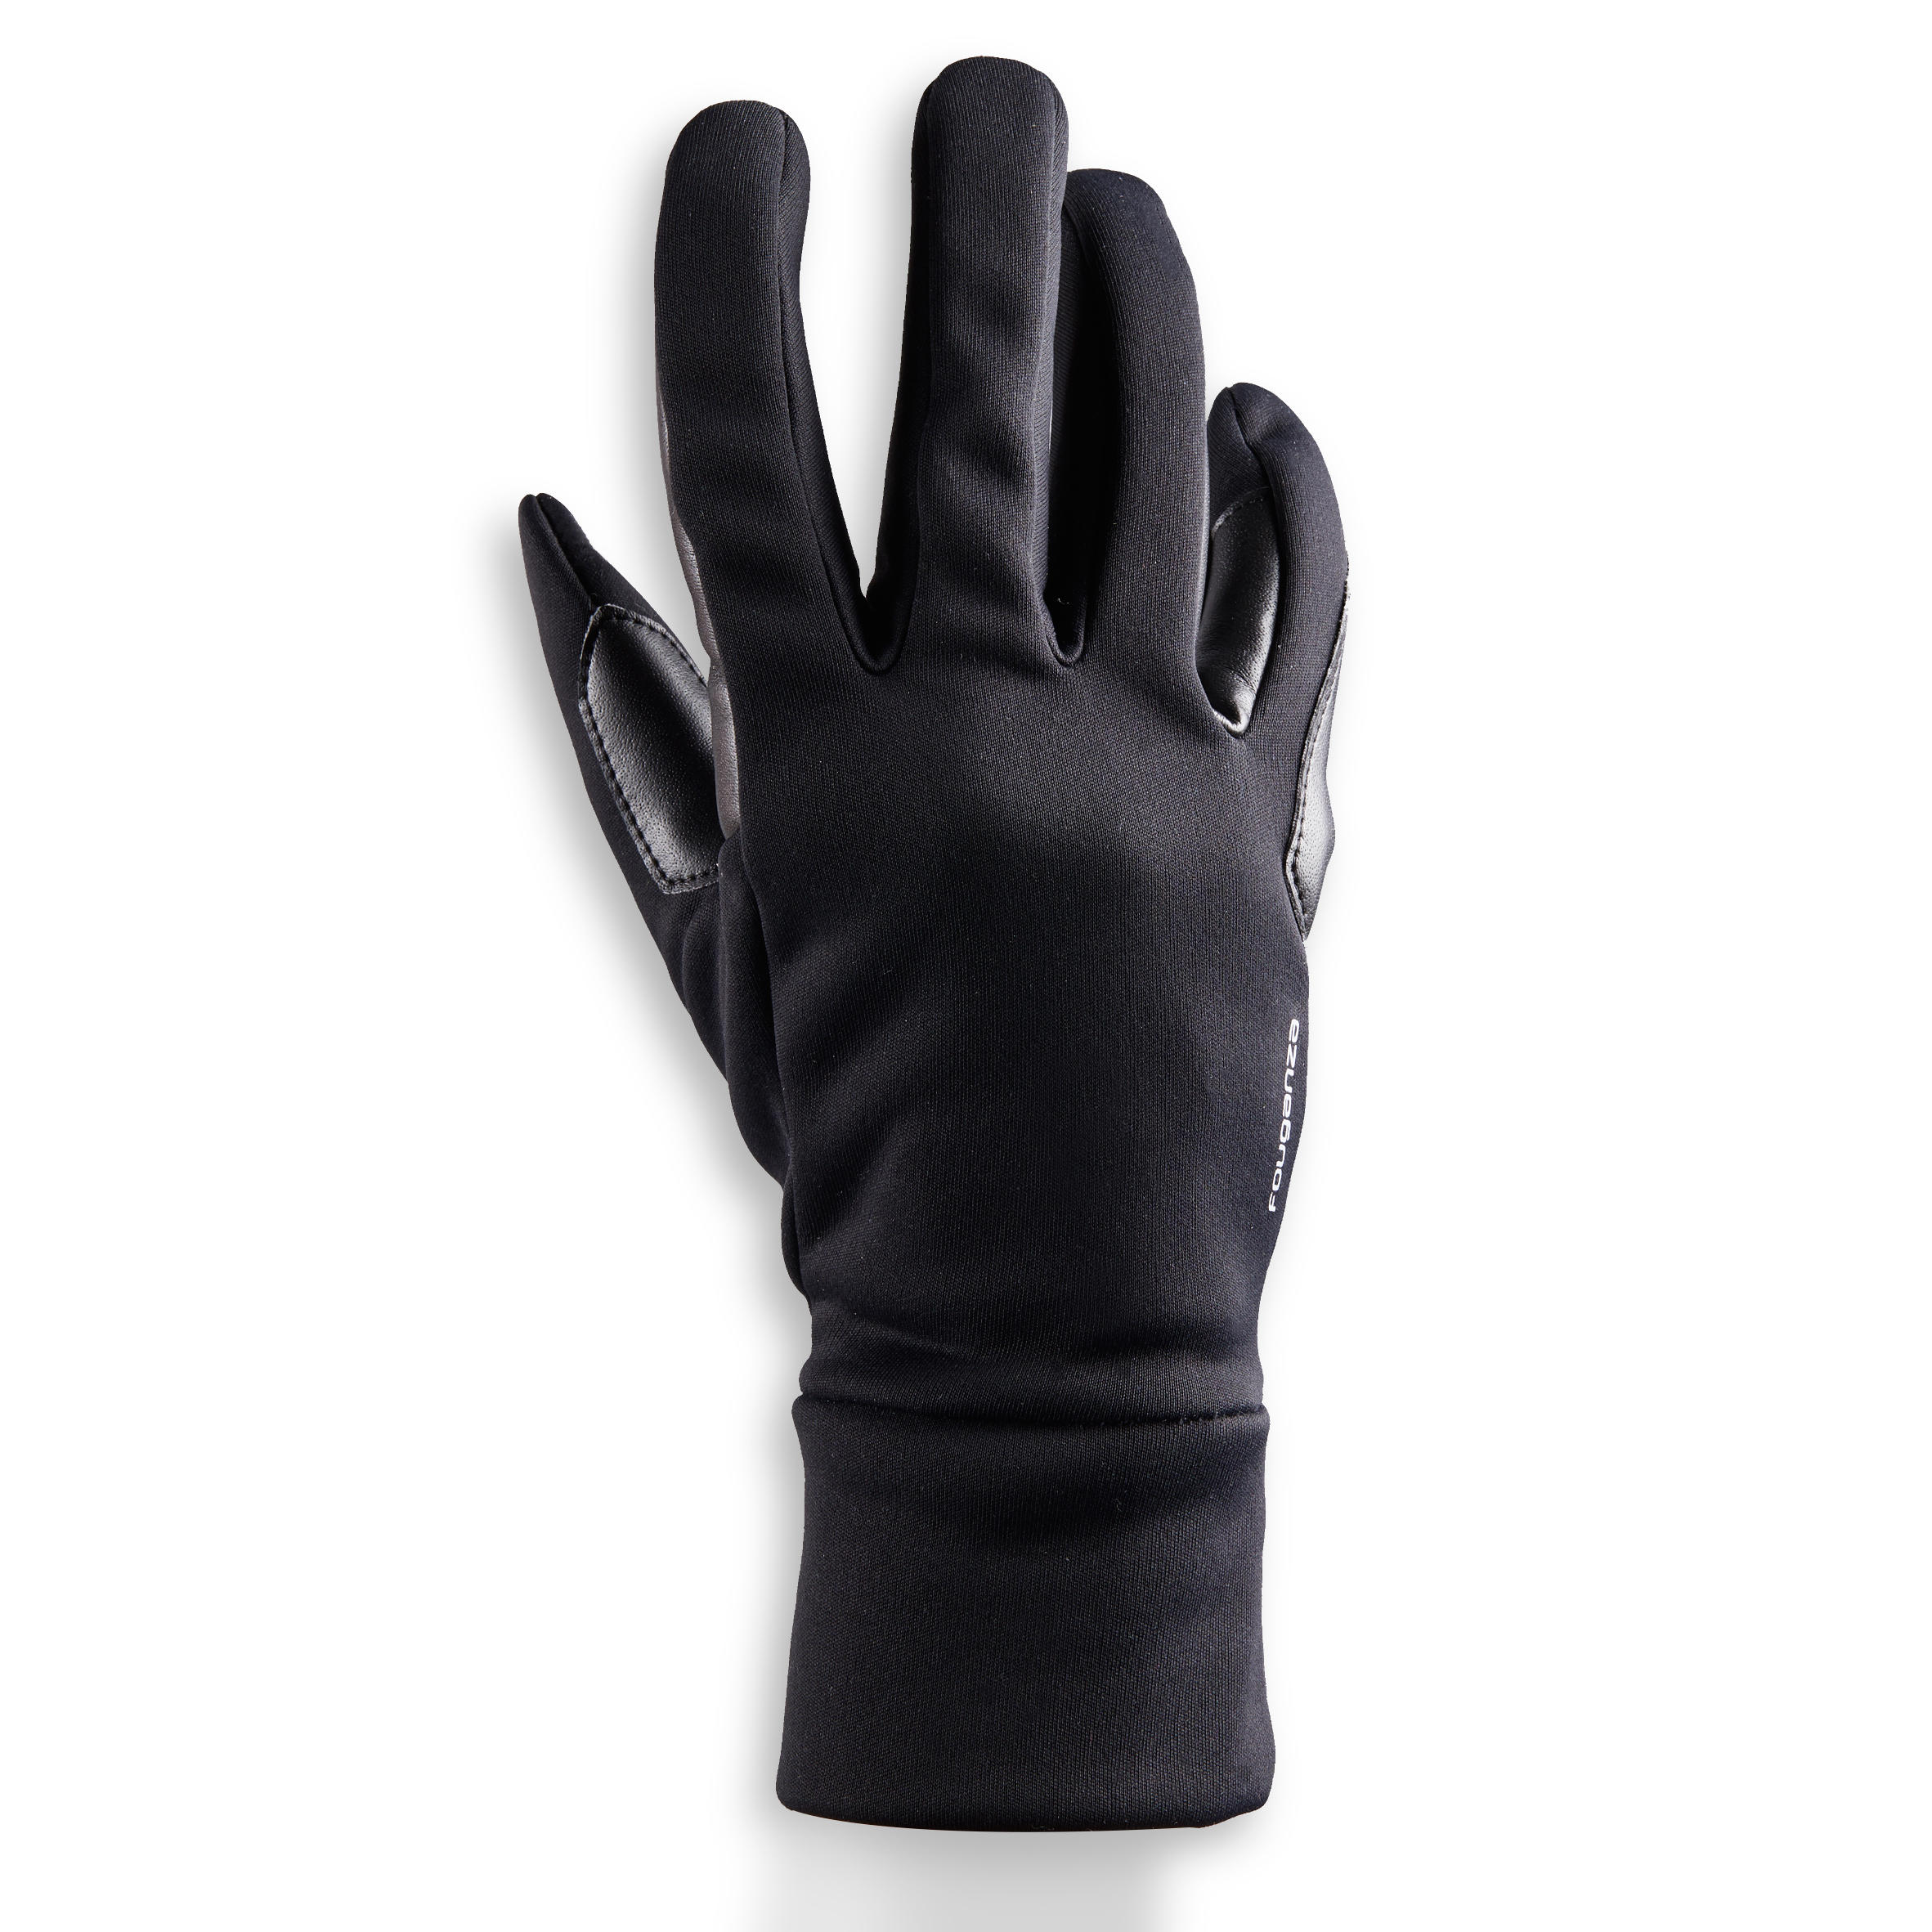 100 Warm Women's Horse Riding Gloves - Black 4/7